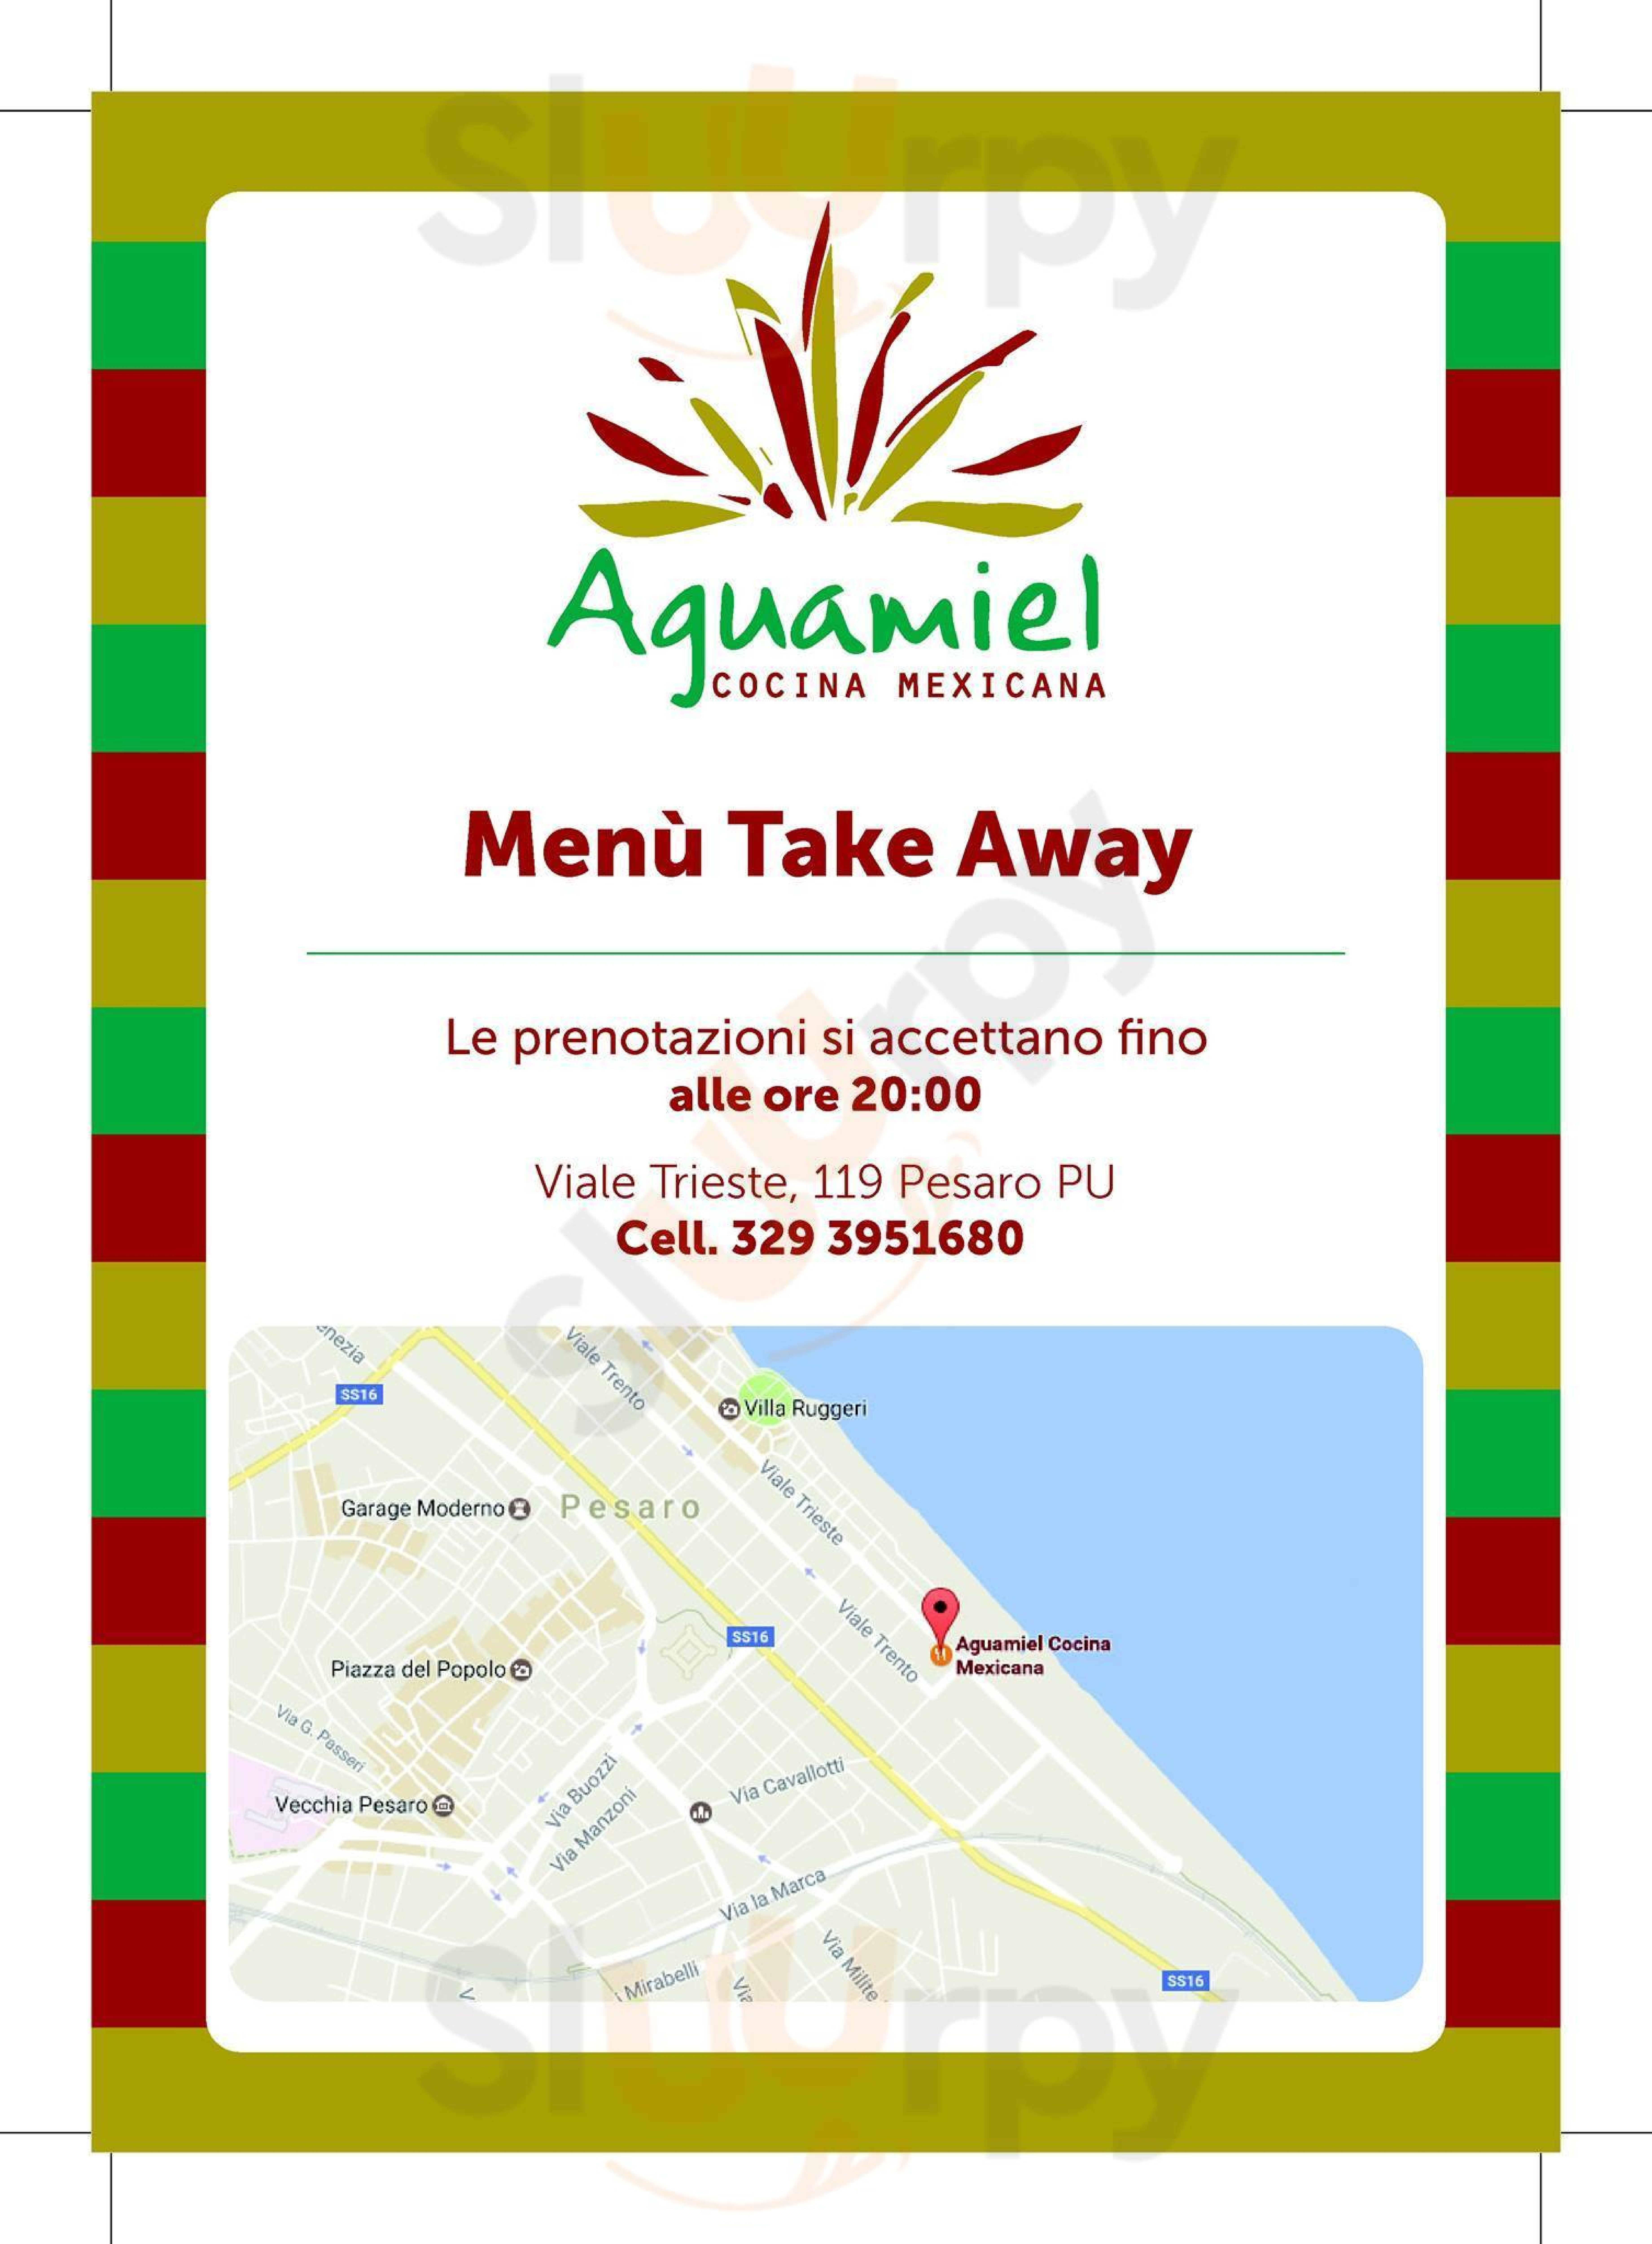 Aguamiel Cocina Mexicana Pesaro menù 1 pagina